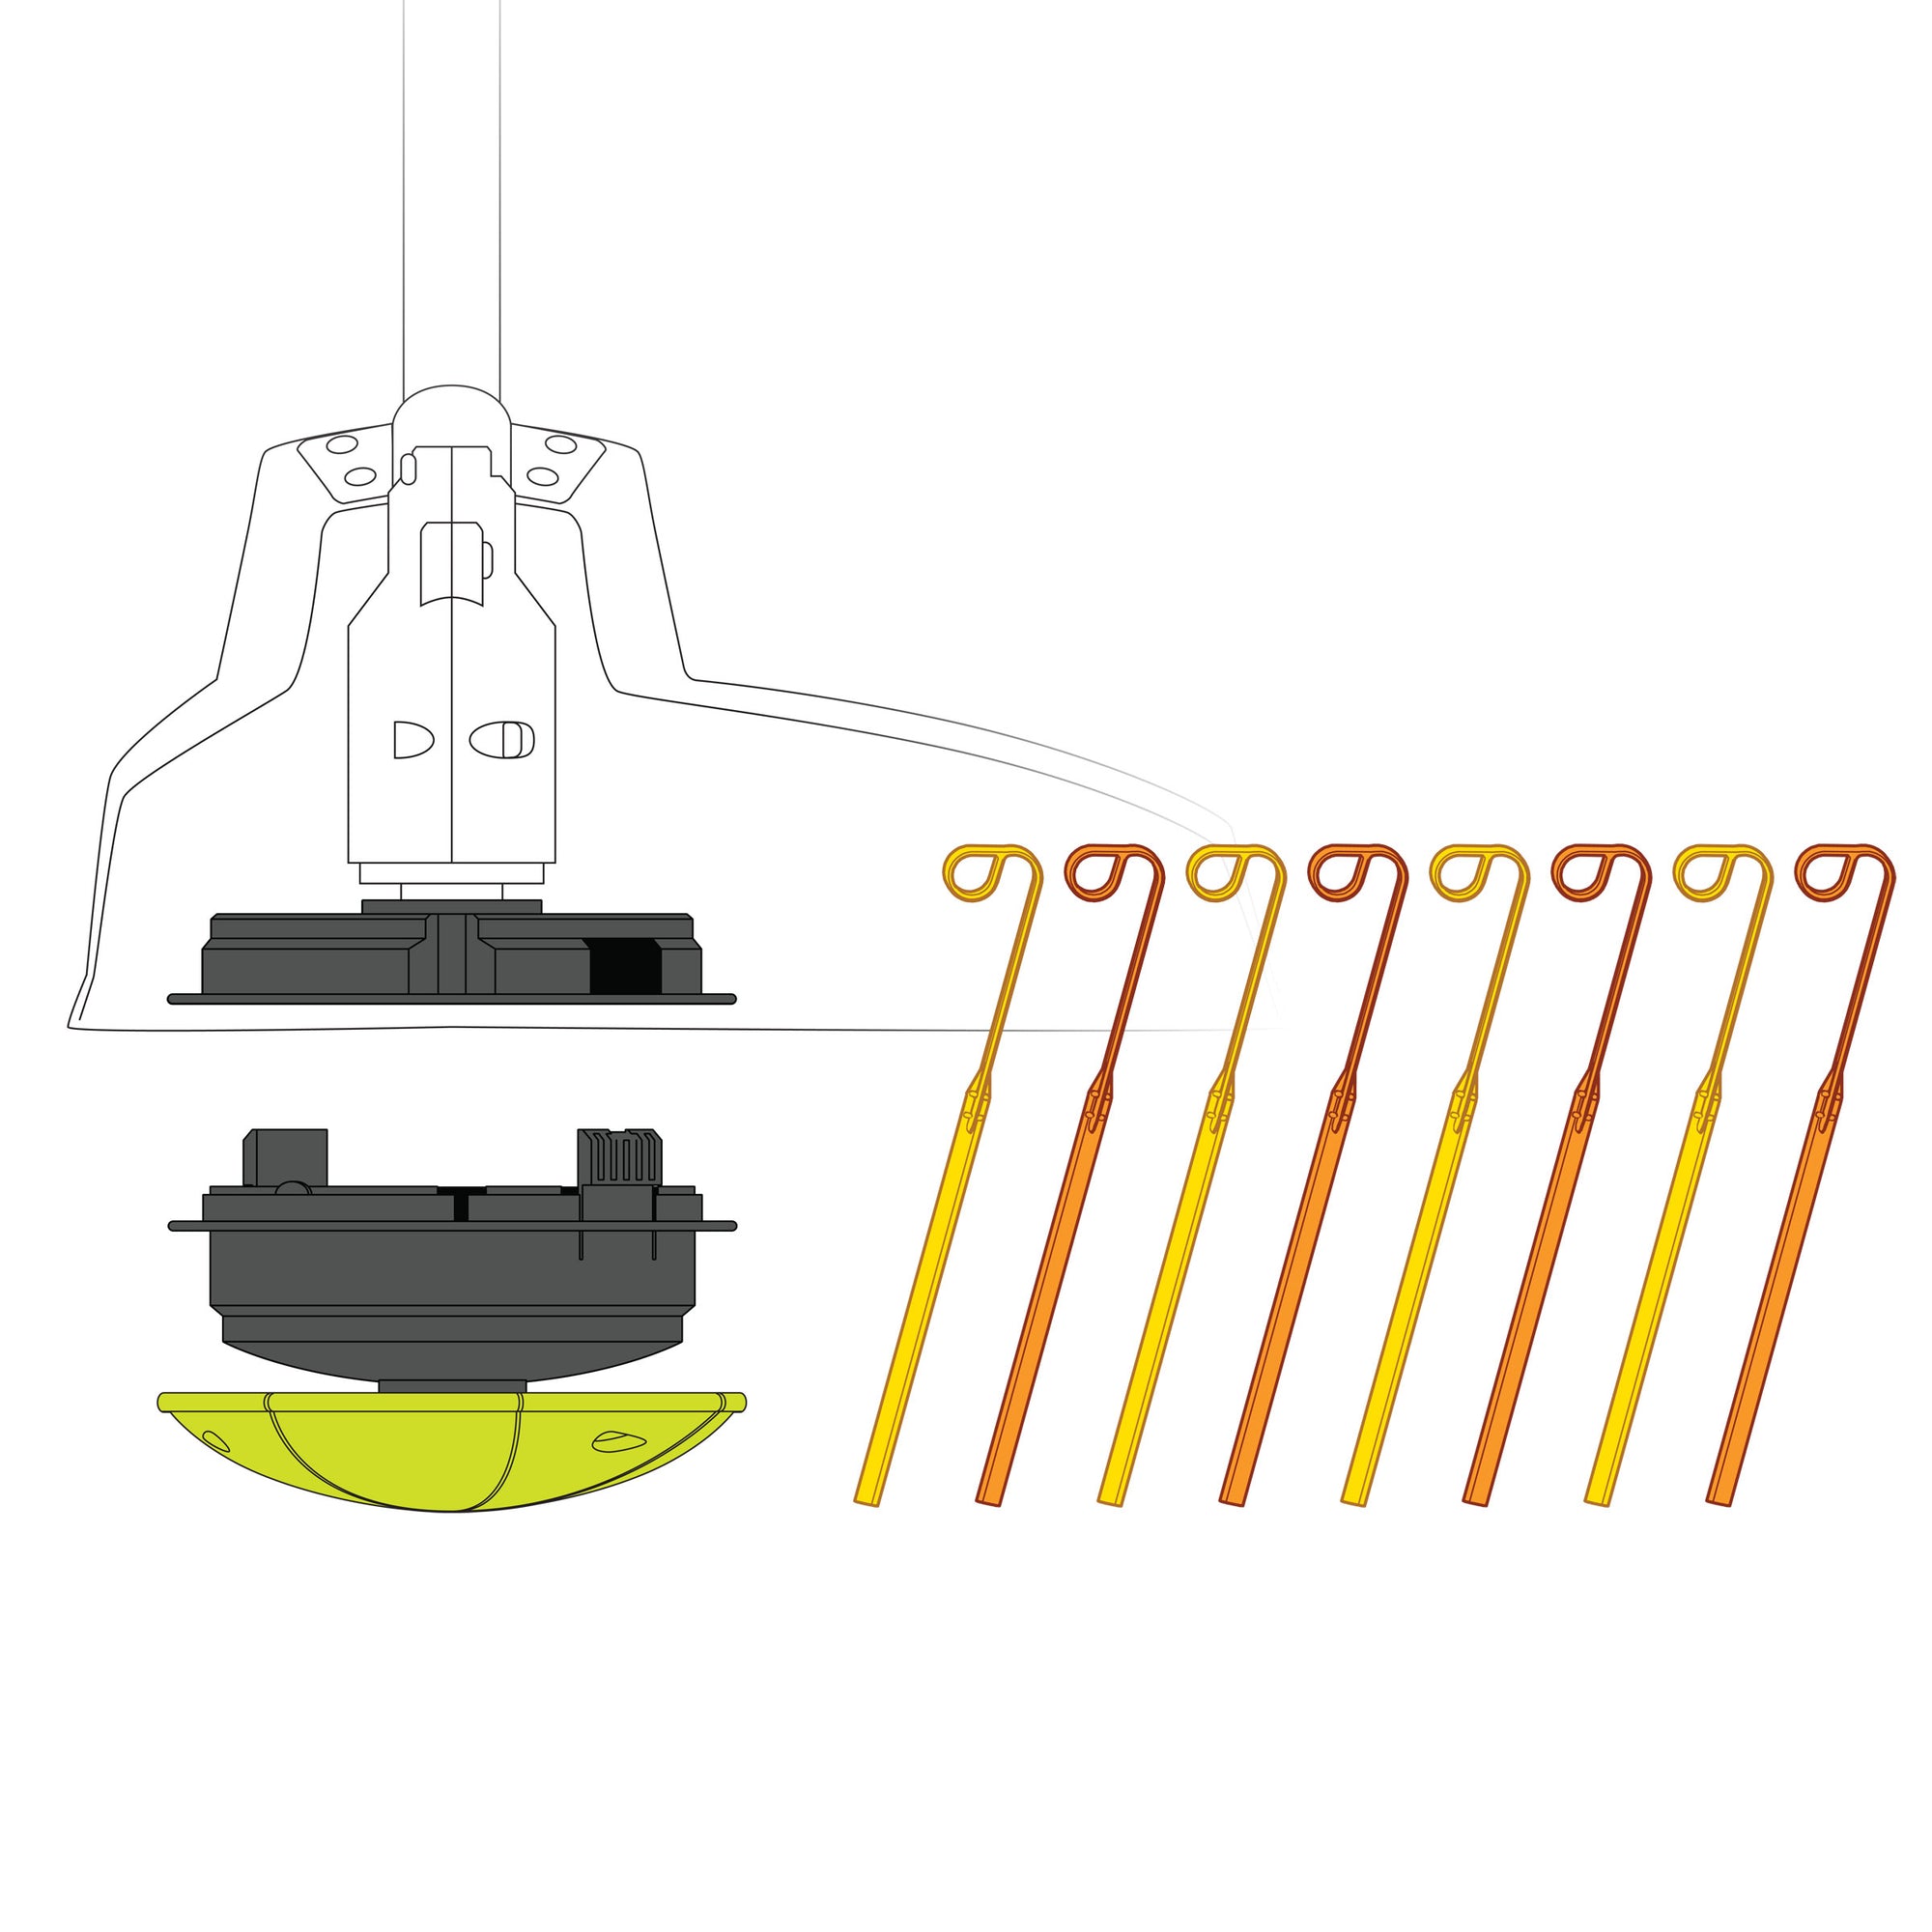 Aero-Flex Snap and Trim BD Cartridge Upgrade Kit STBD01